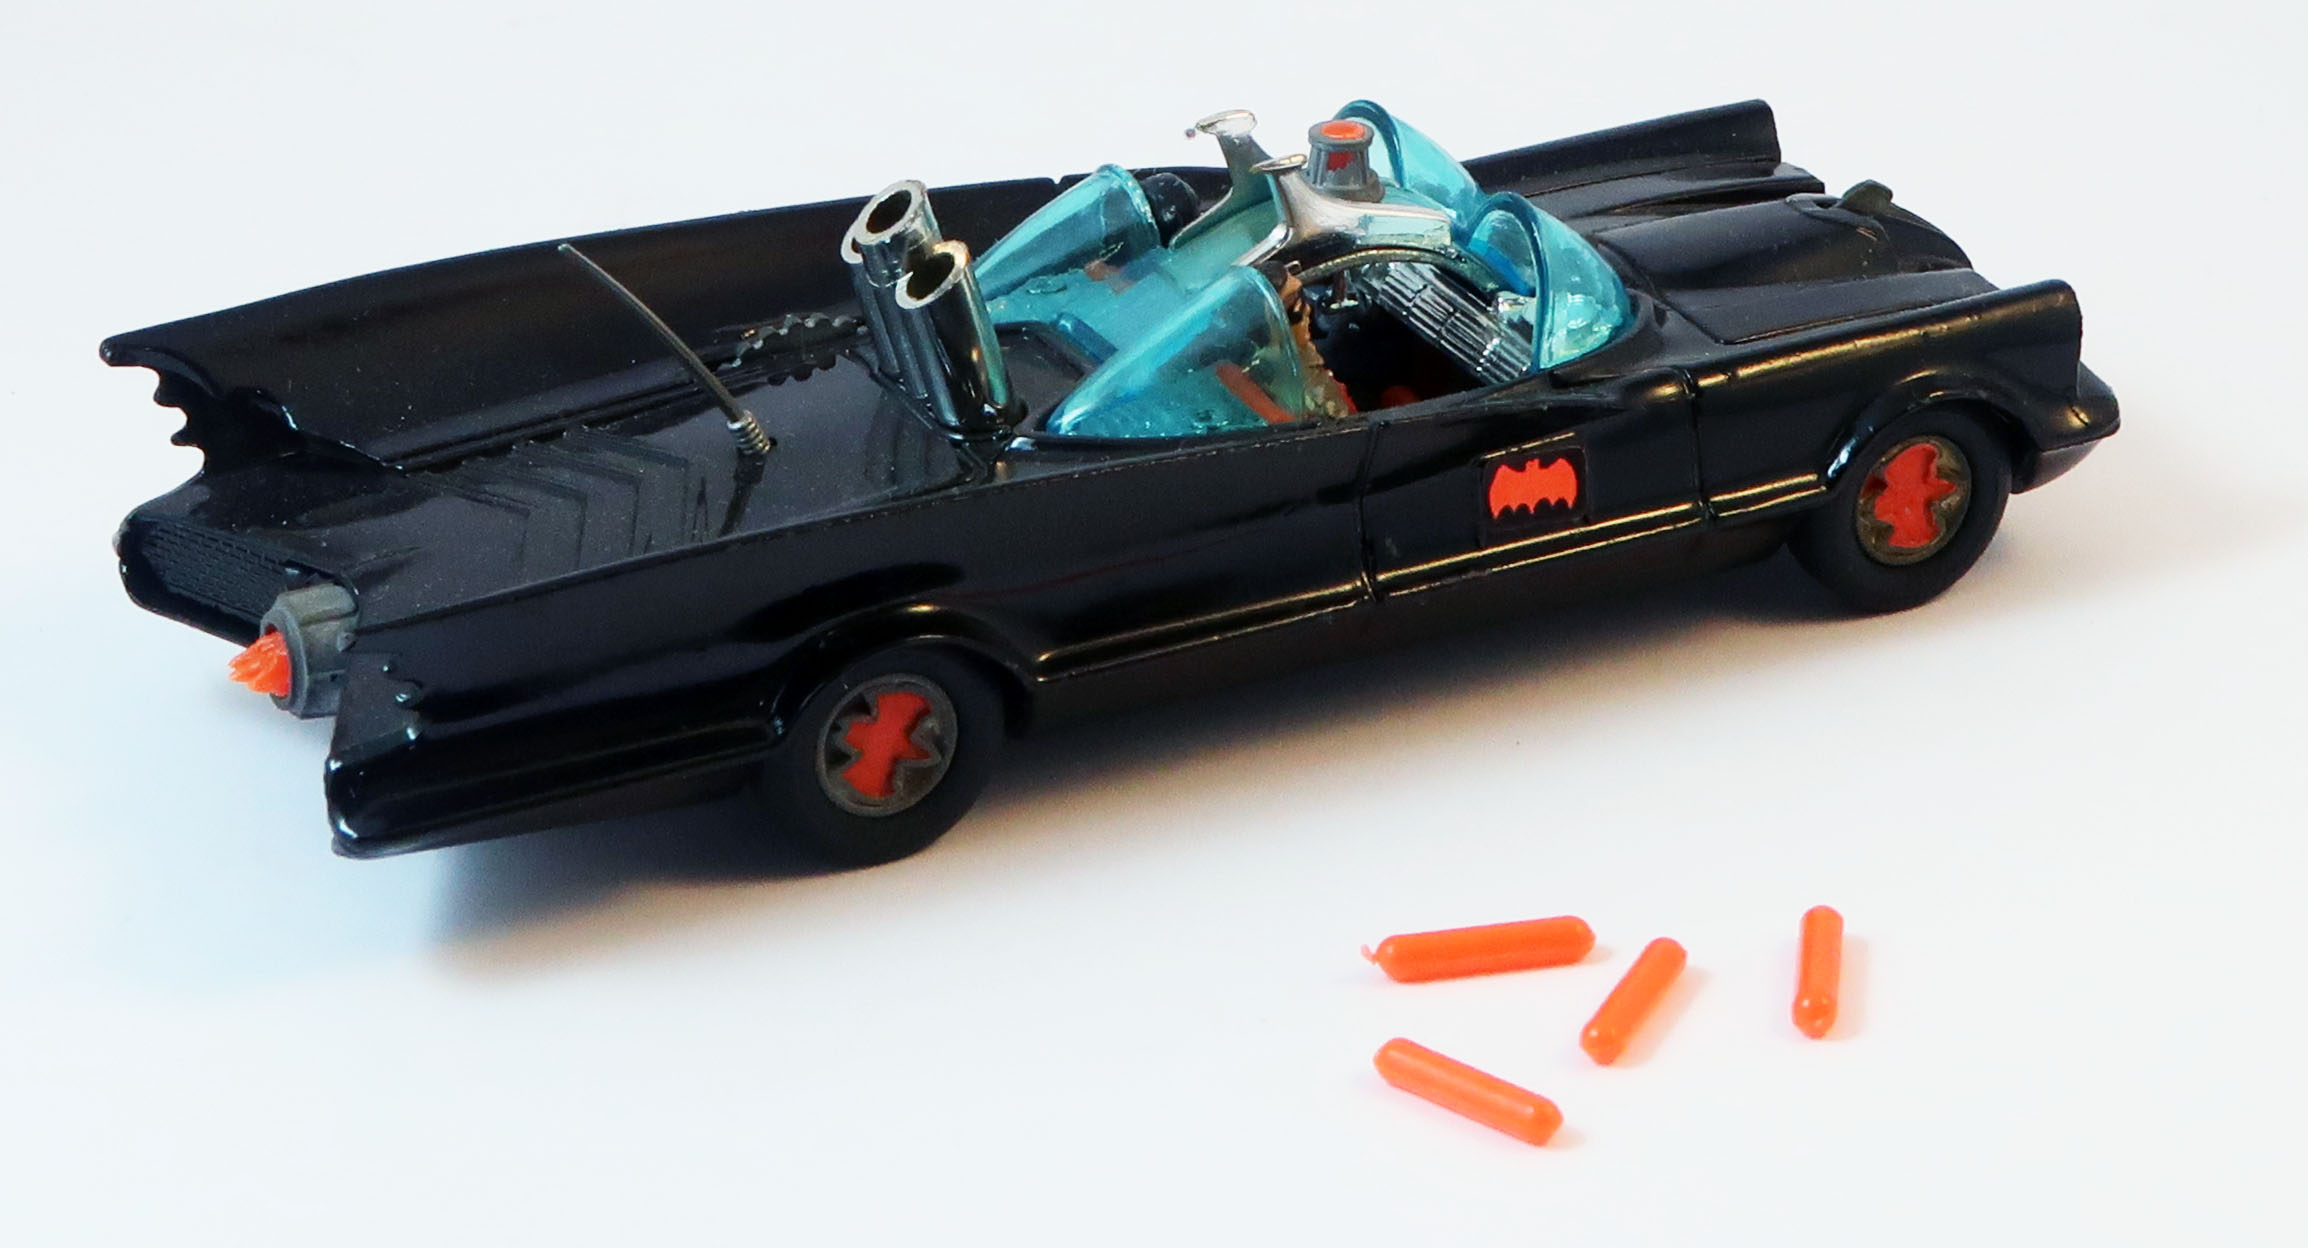 Batmobile CORGI Toys 1966